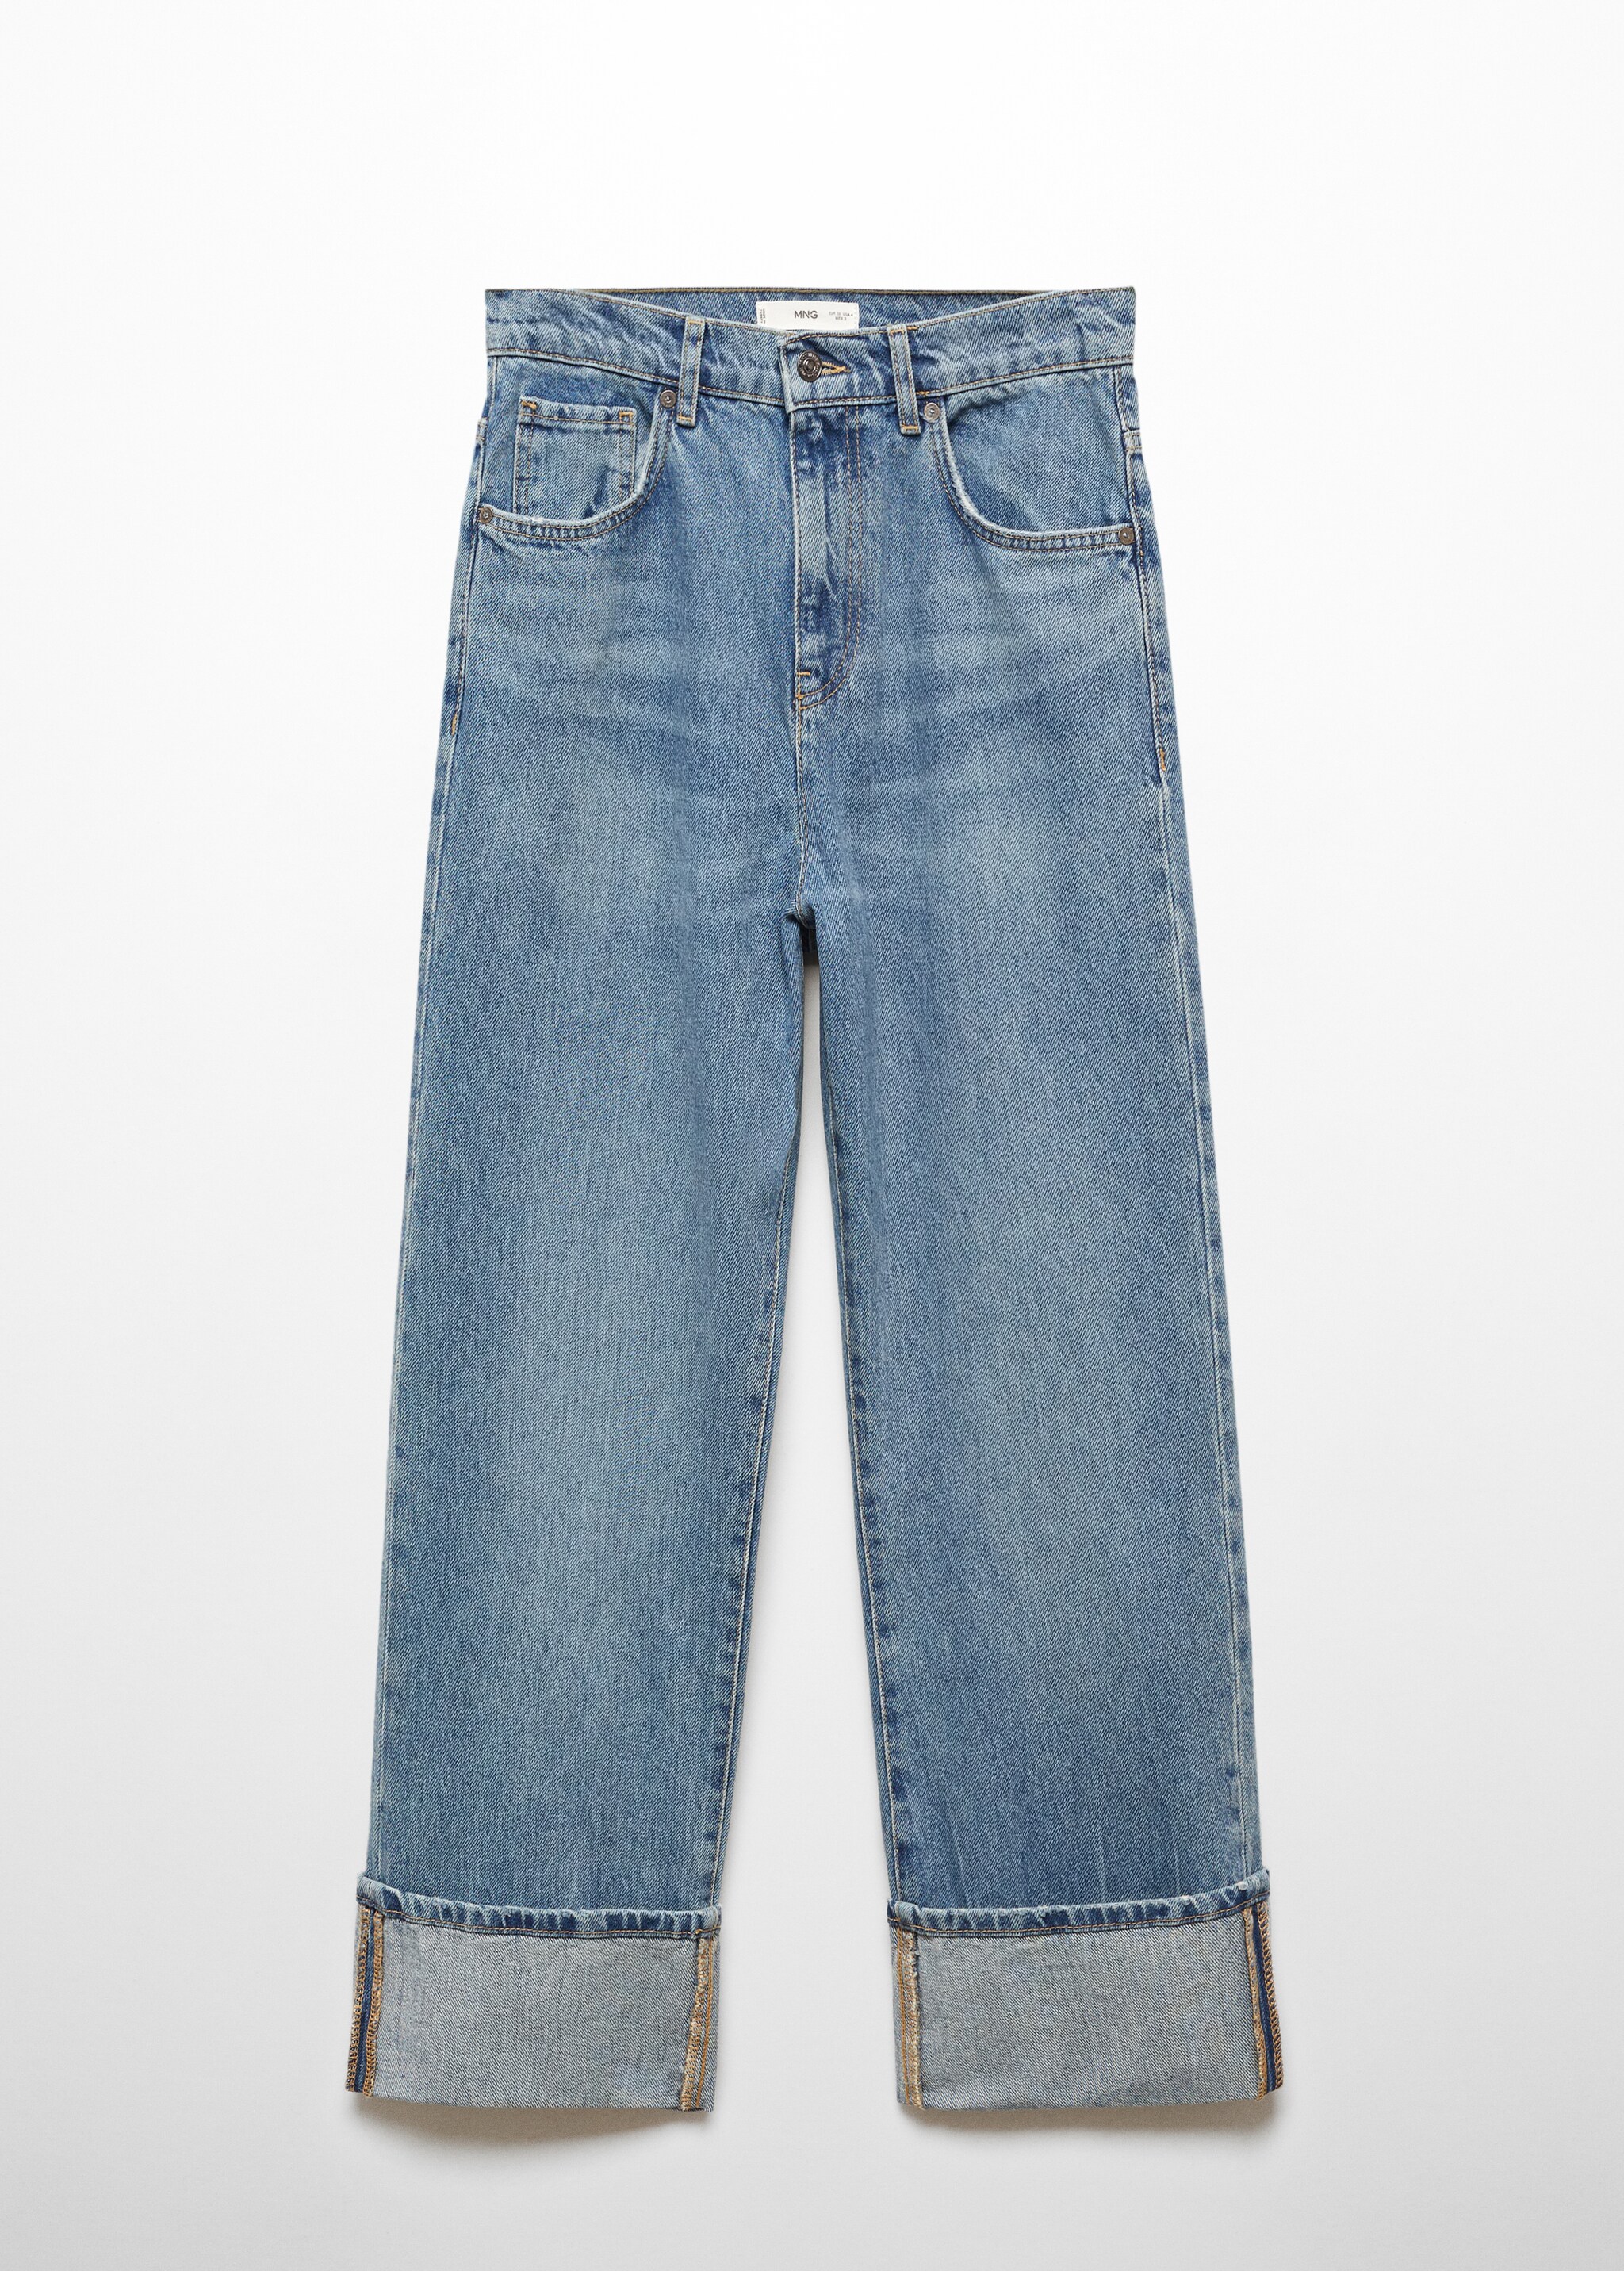 Jeans wideleg bajo vuelto - Artículo sin modelo